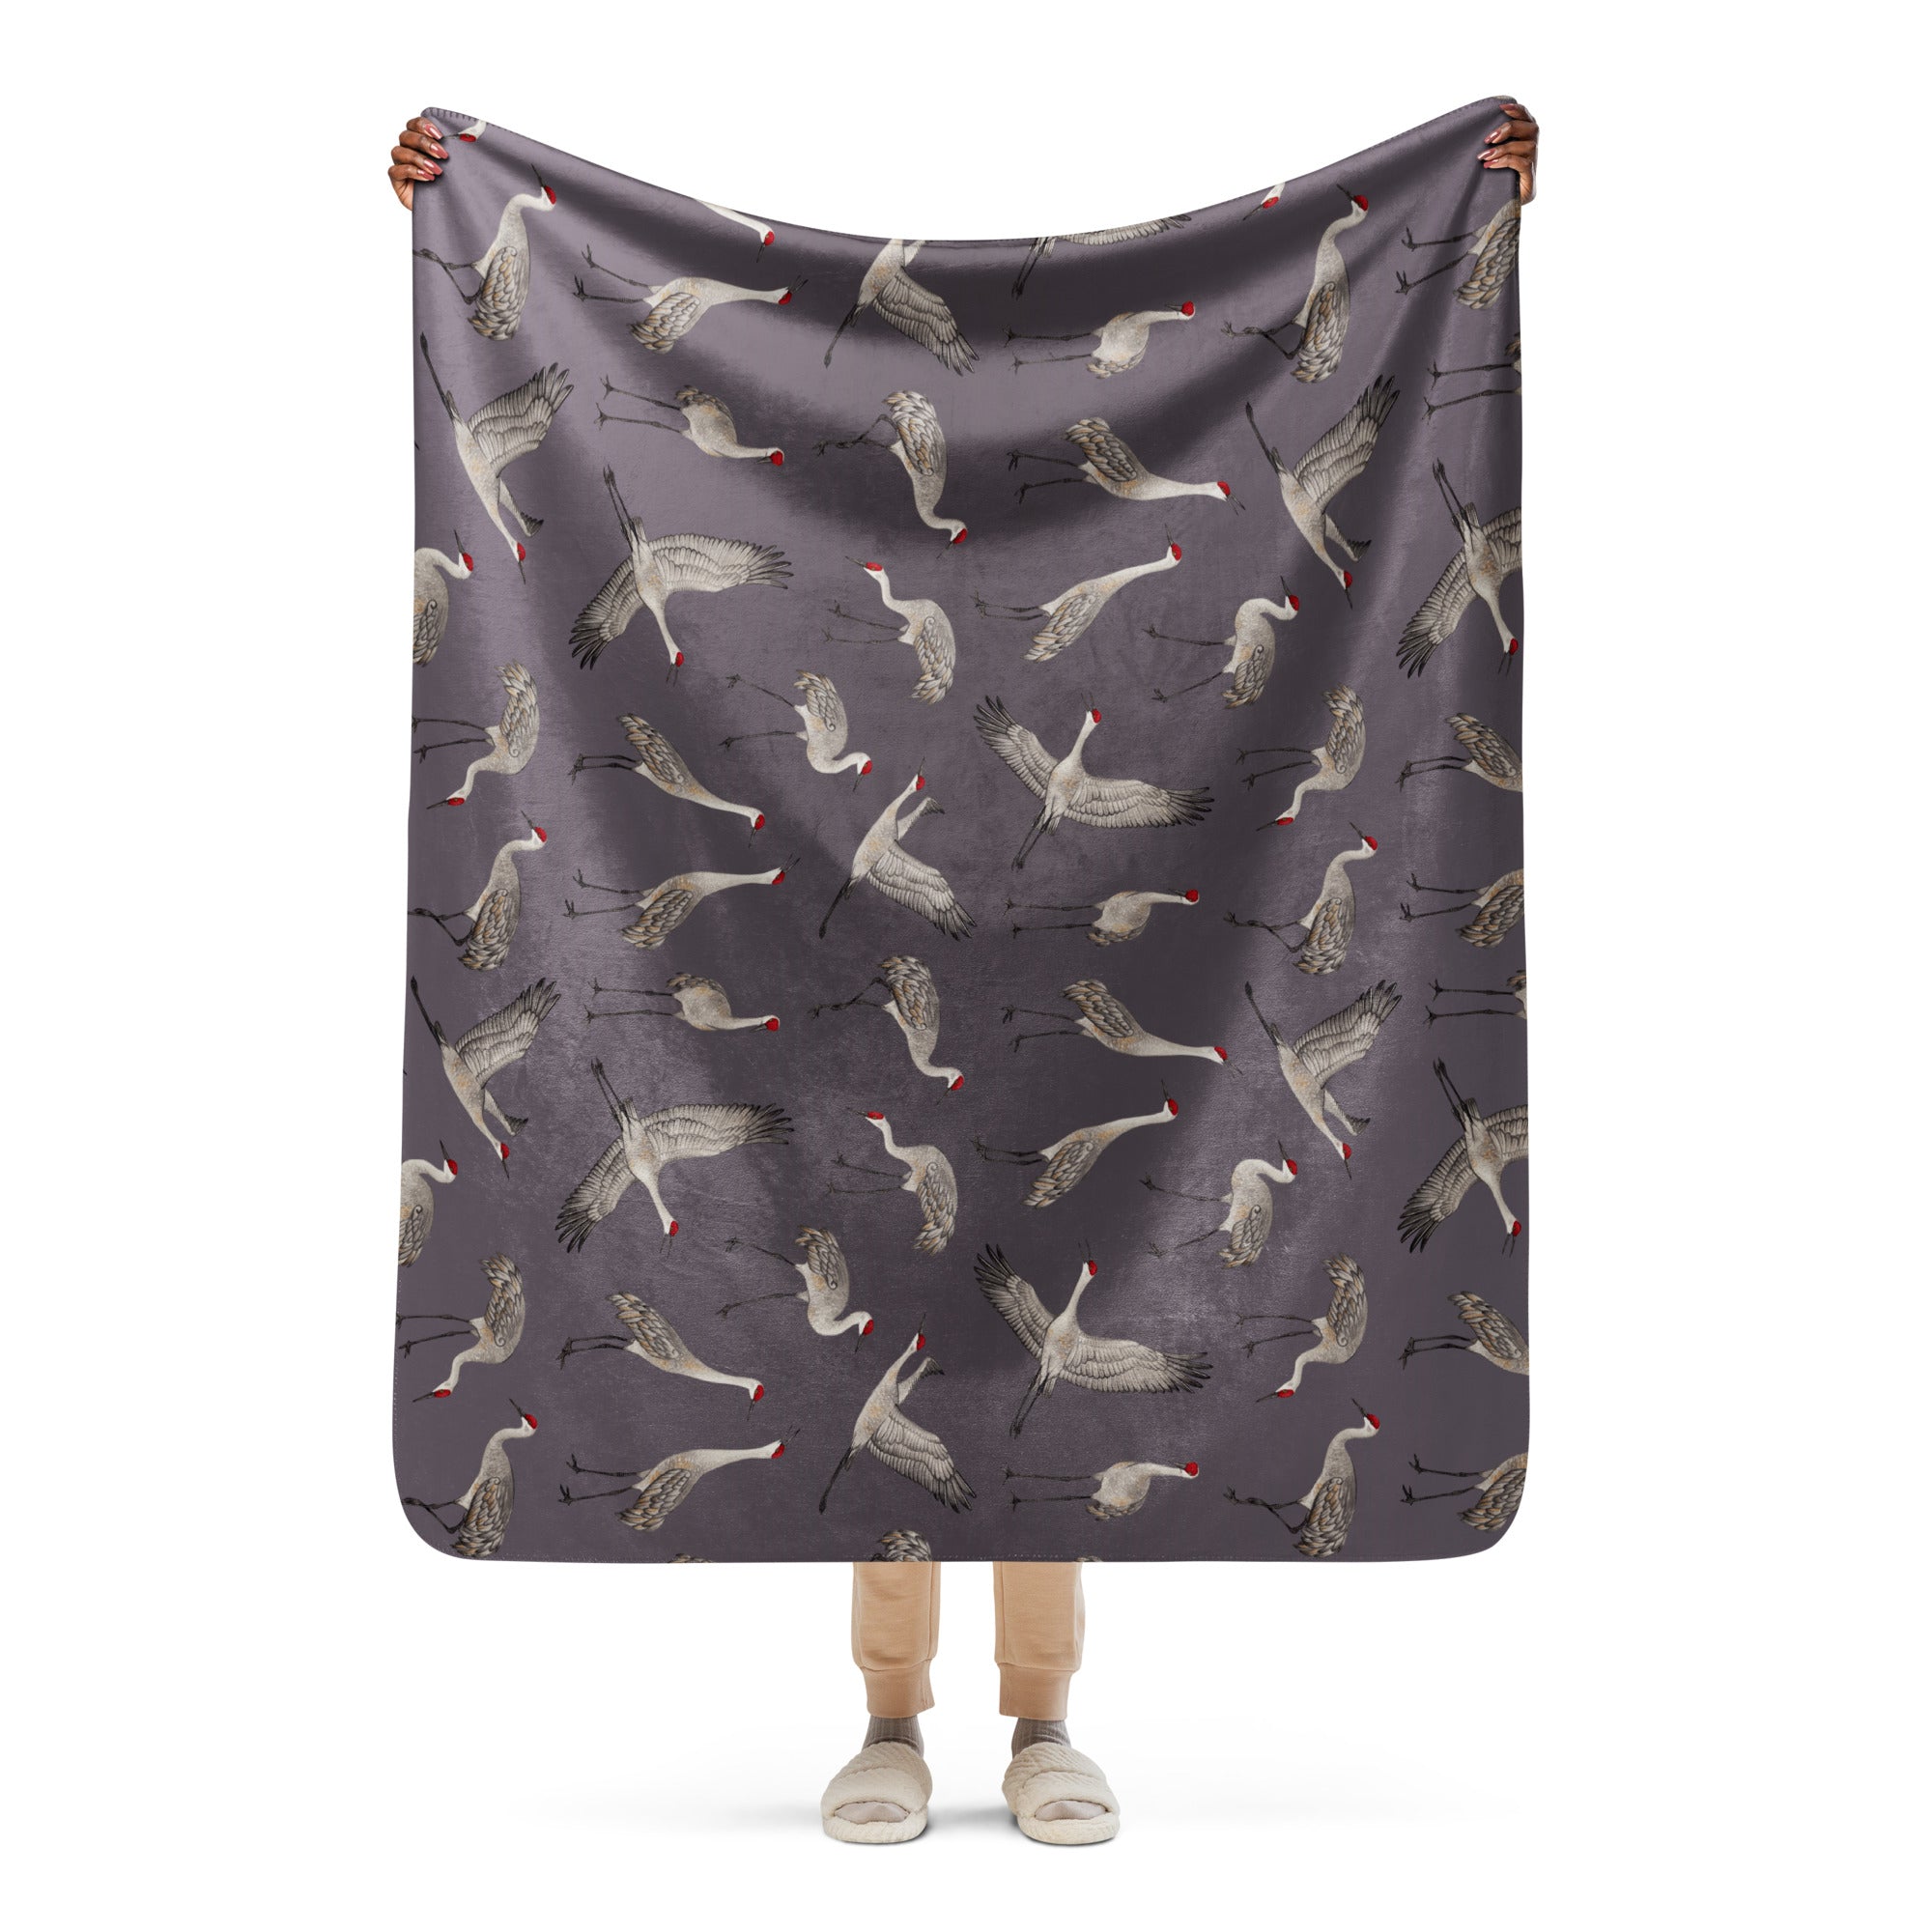 Sandhill Cranes Sherpa Blanket (Horizontal)